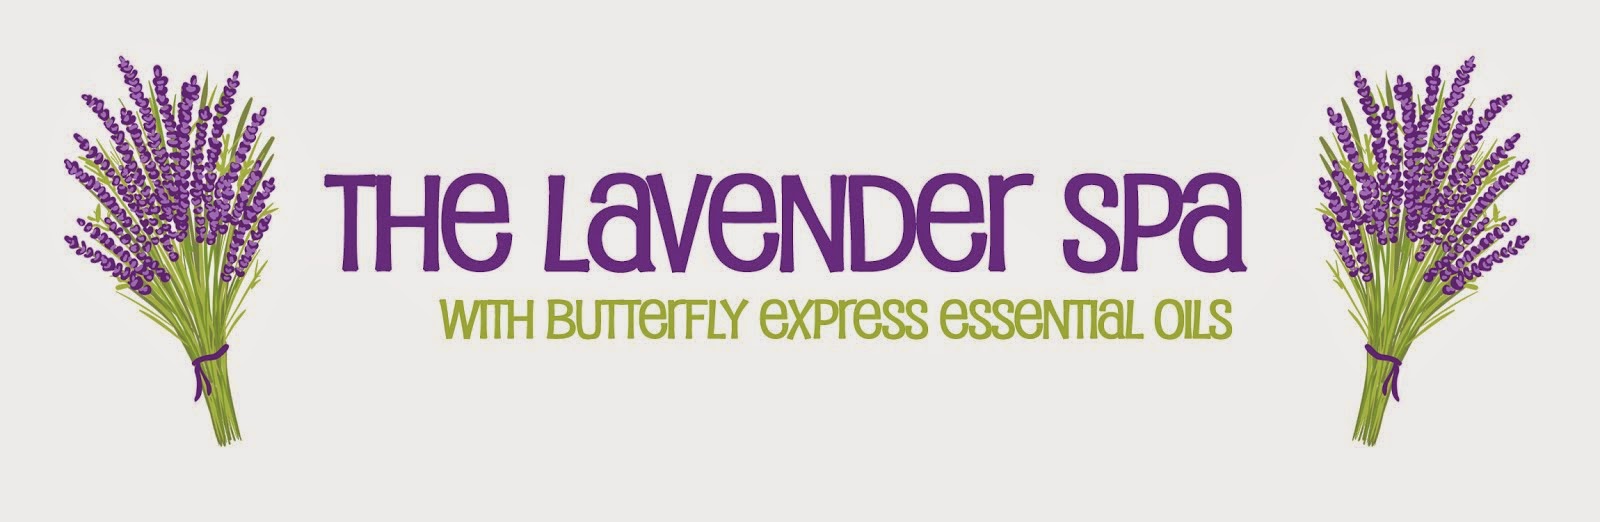 The Lavender Spa